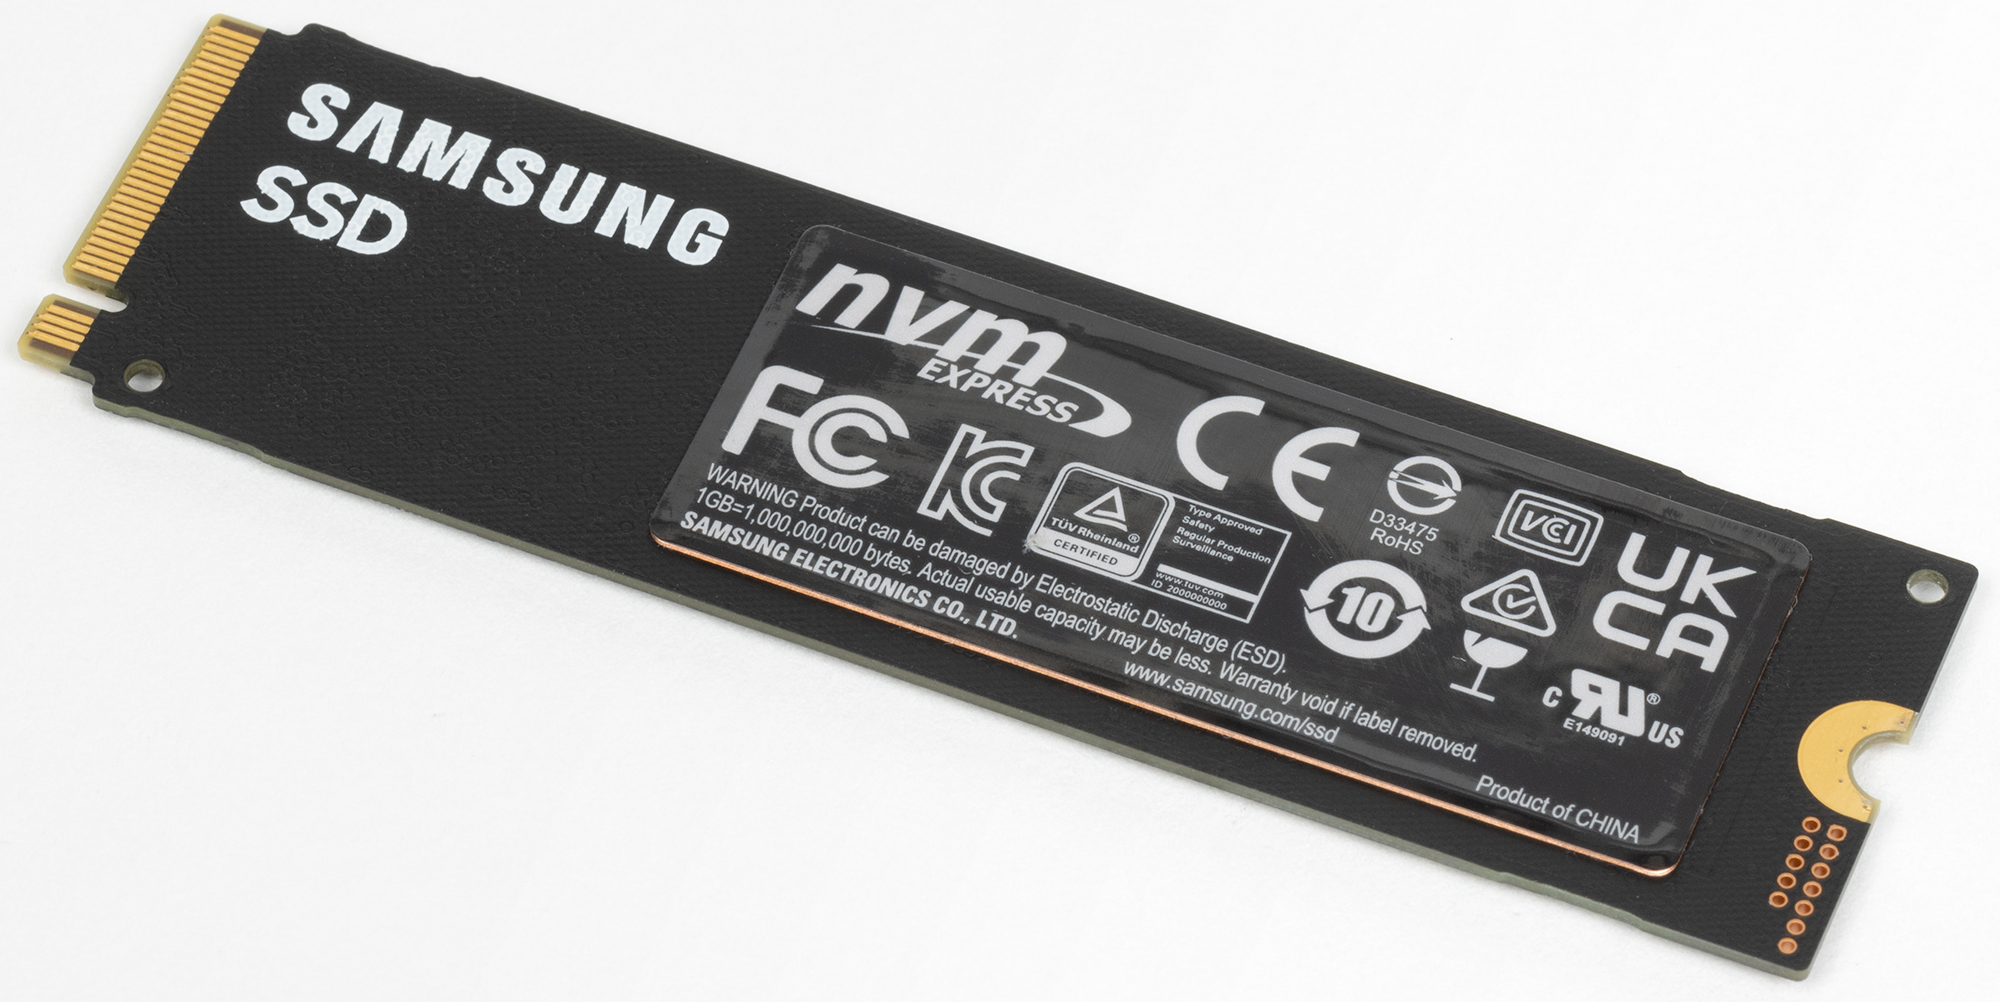 SSD накопитель Samsung 980 Pro m.2 2280 2 ТБ. SSD Samsung 980 Pro 1тб в PS 4. Ссд.